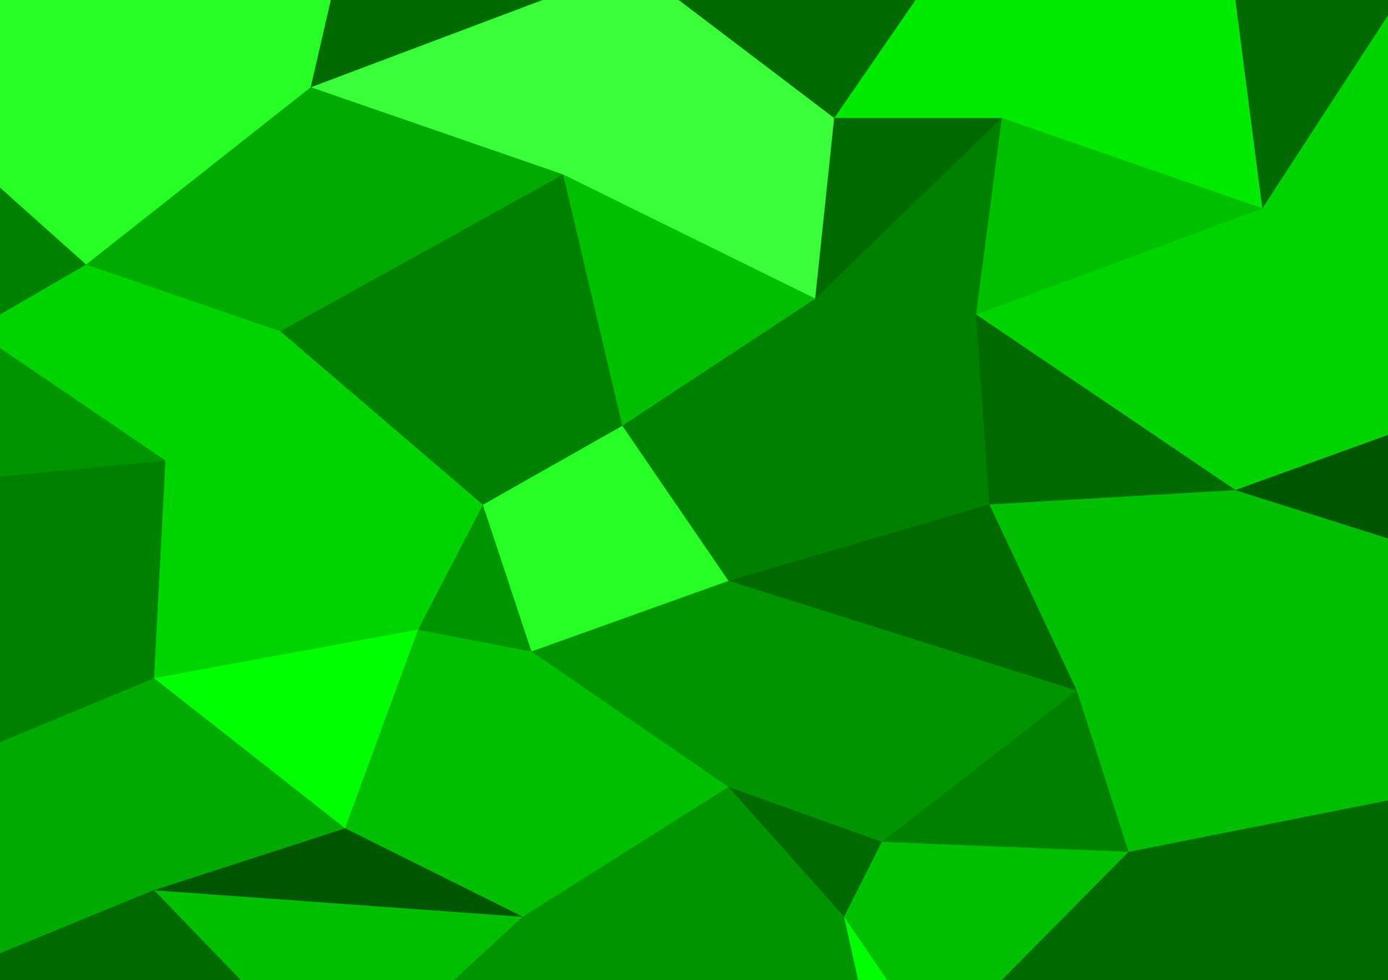 hallo frühlingsfest grün bunt polygon abstrakt hintergrund hintergrund muster vektor illustration